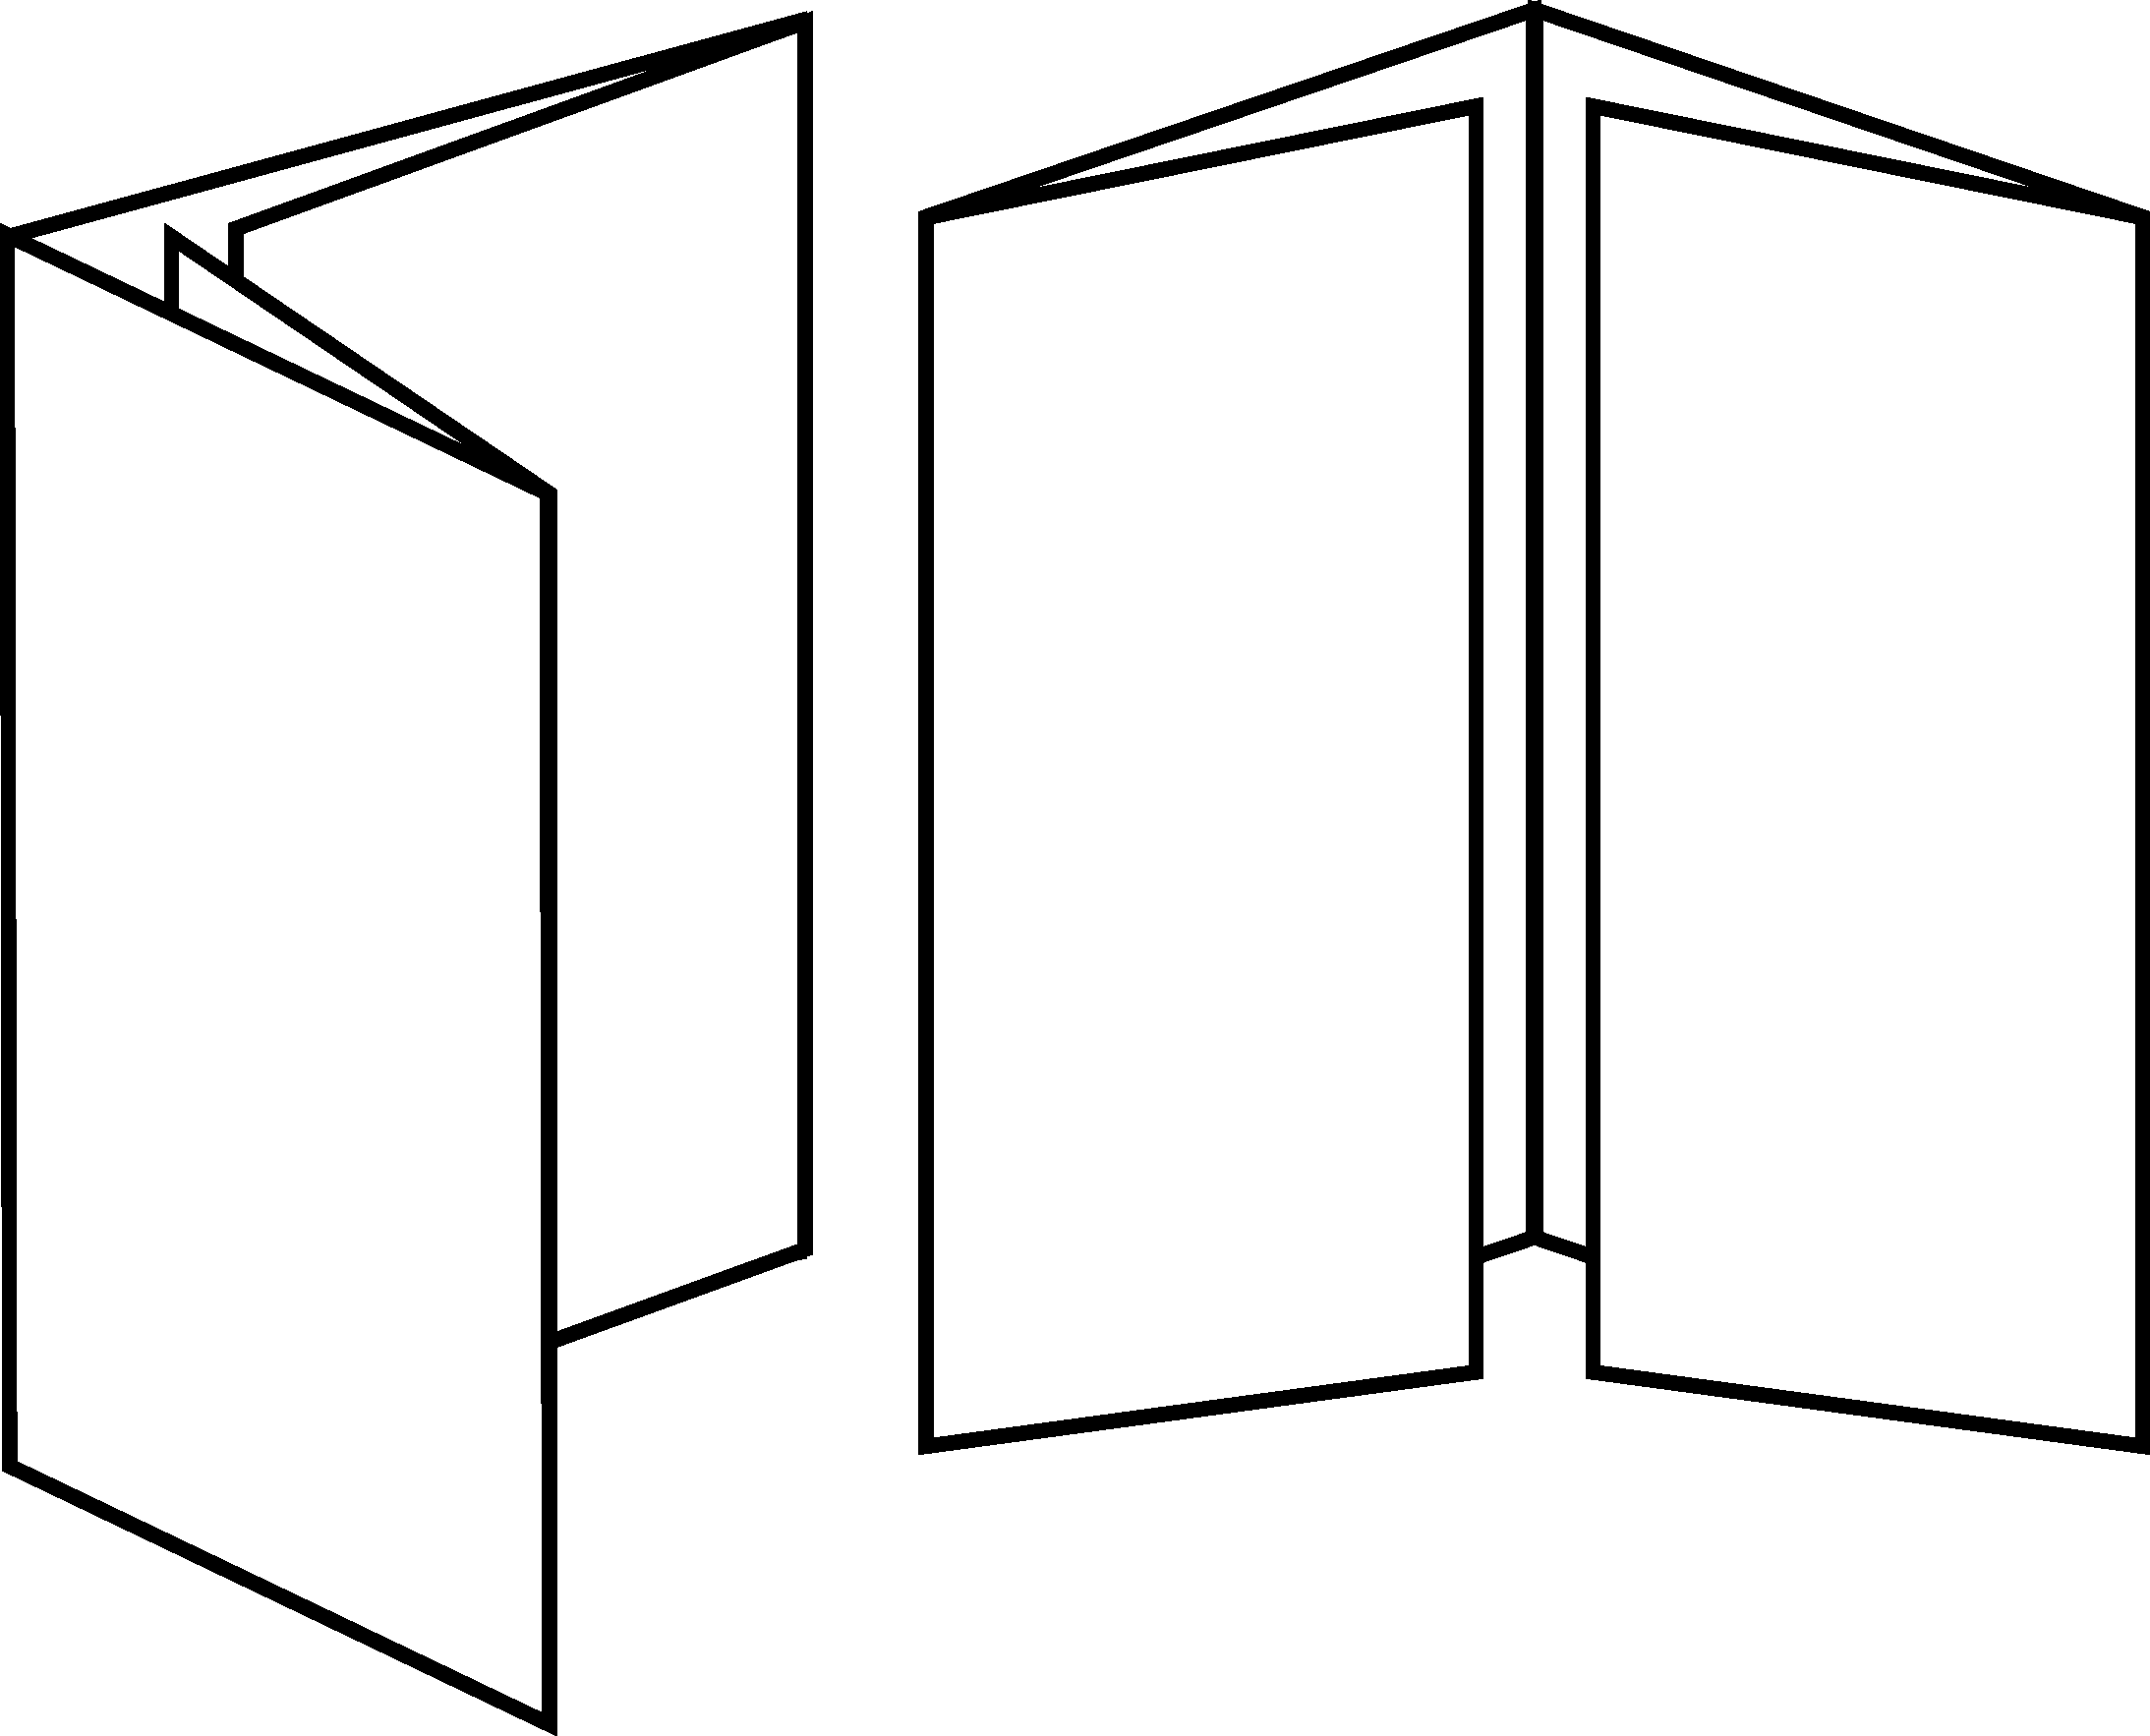 Gate-folding